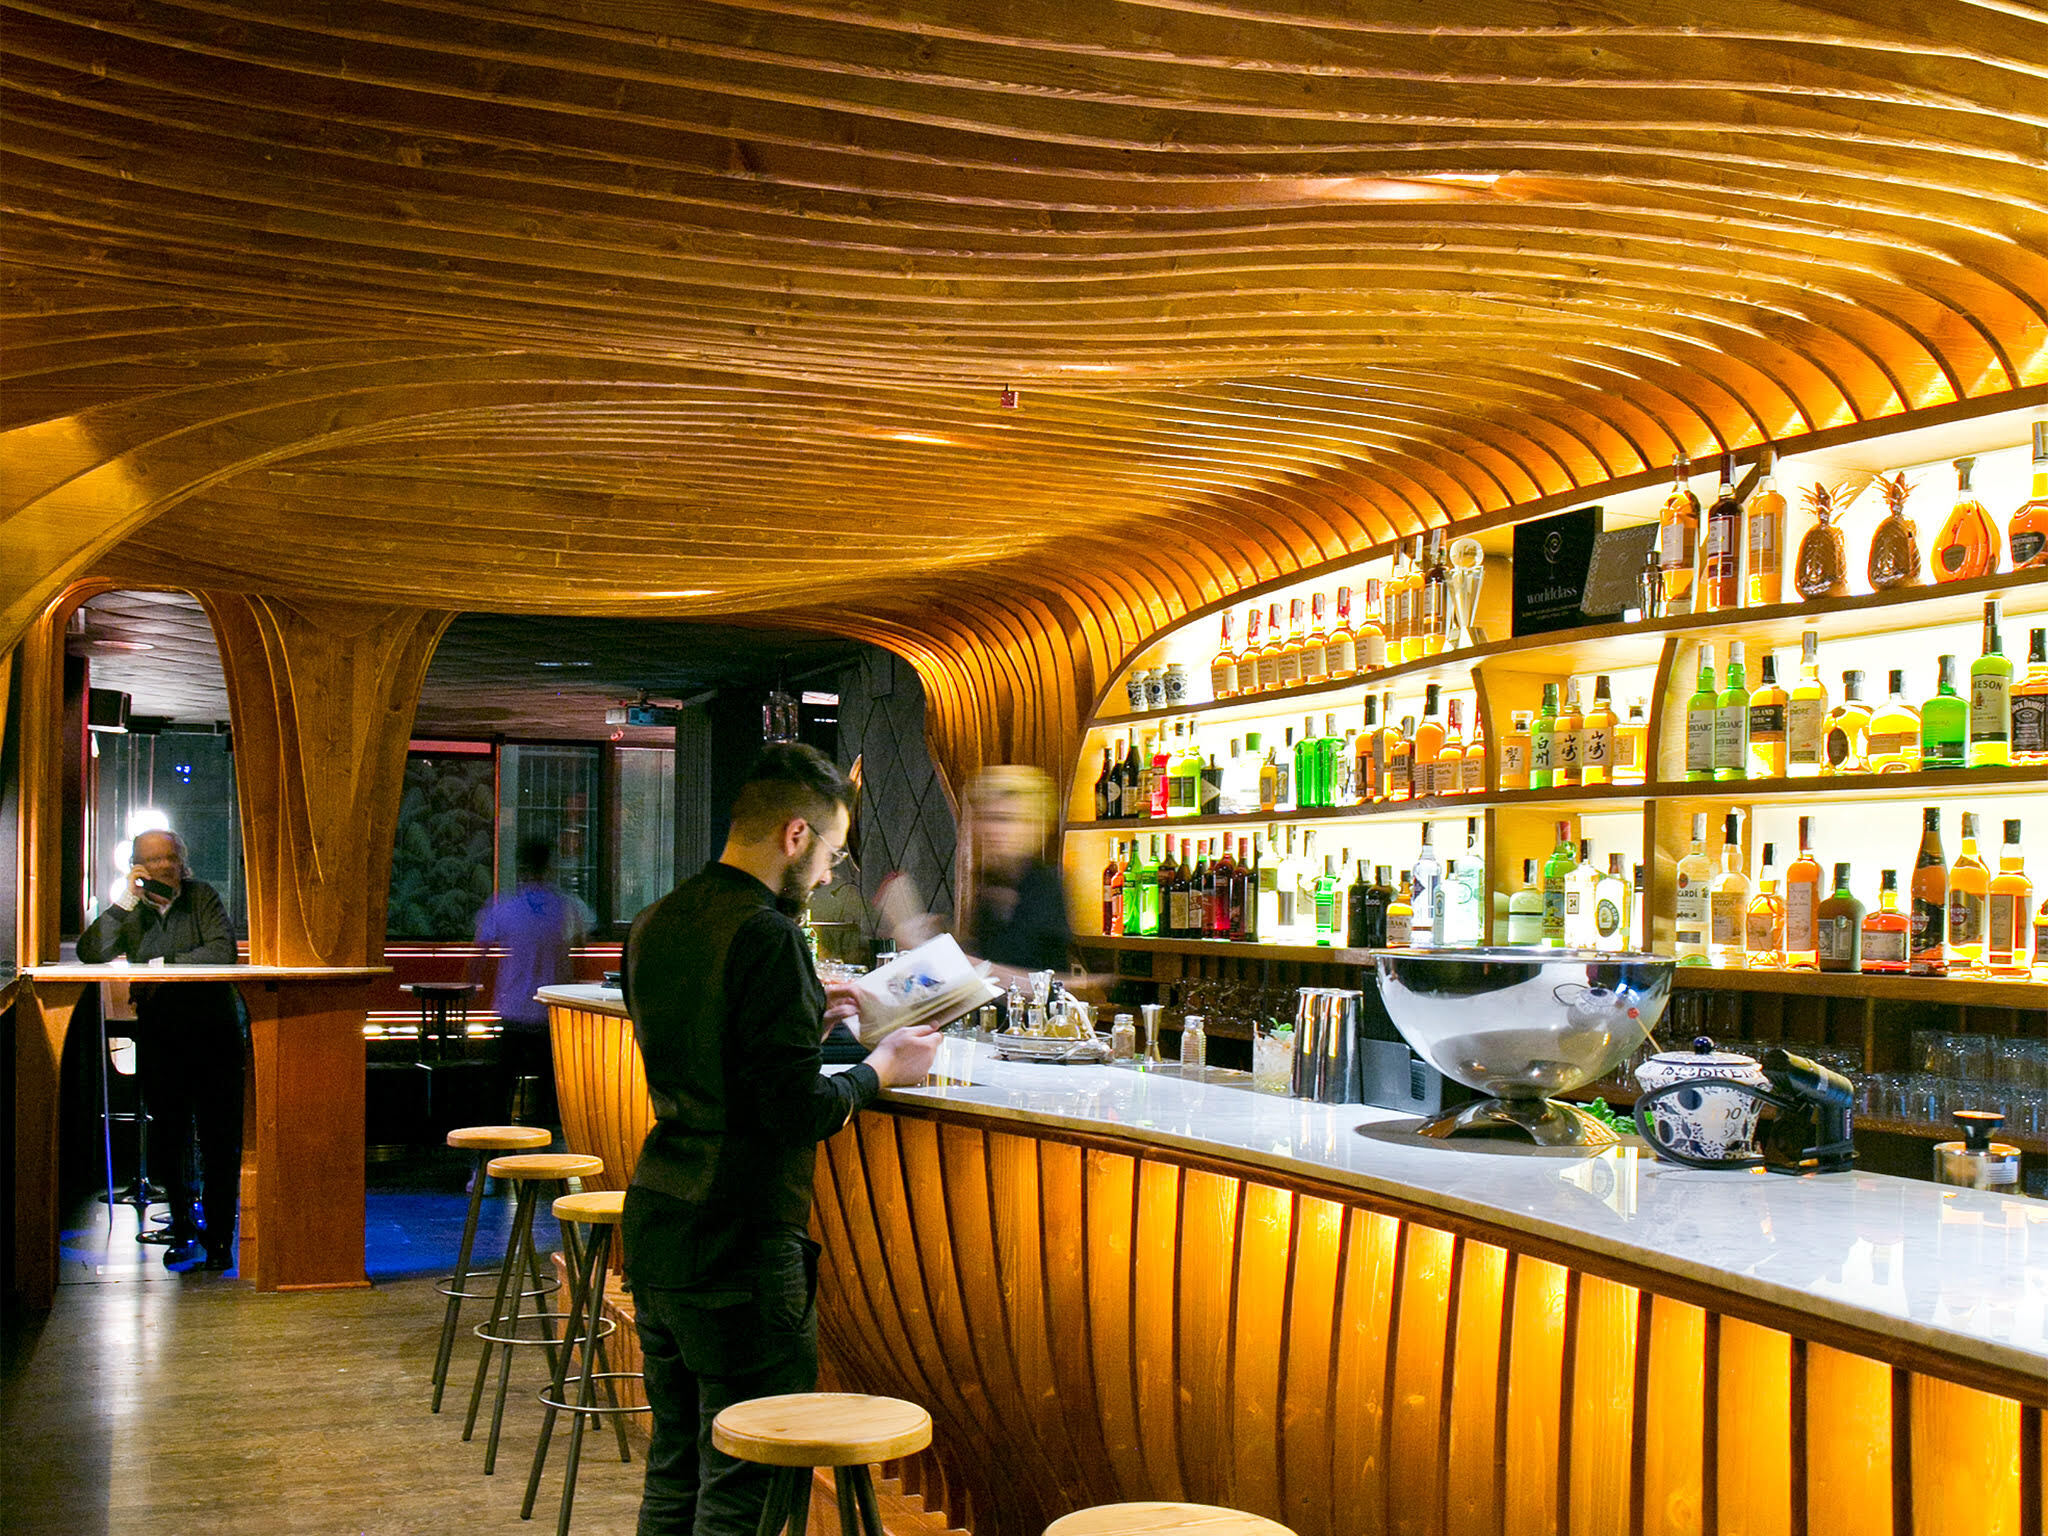 El mejor bar cócteles de España está en Barcelona